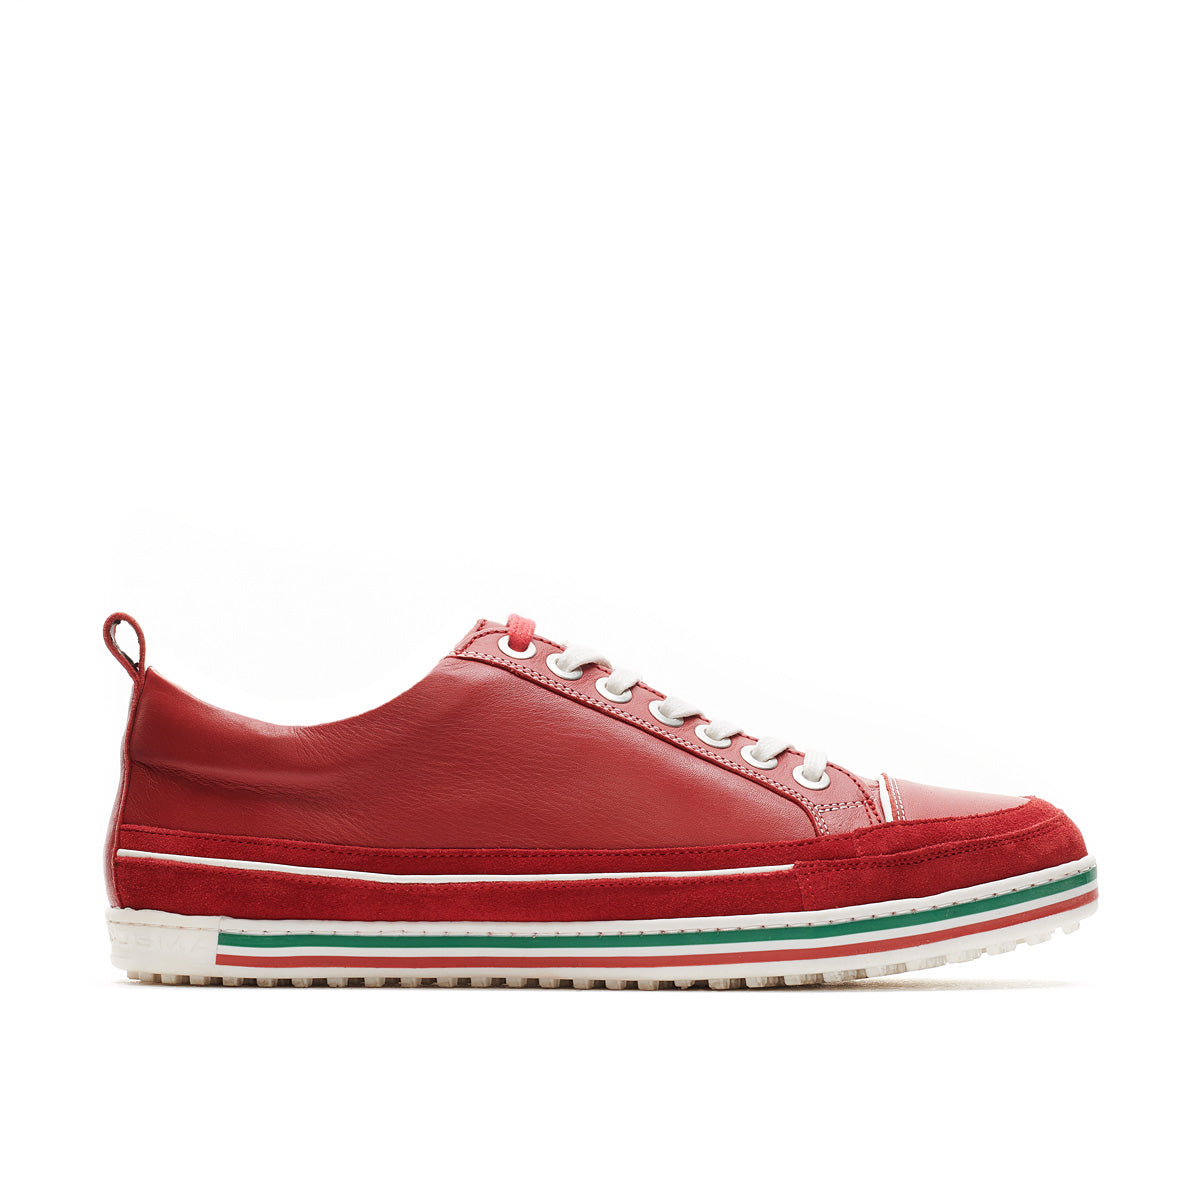 Men's Monterosso Red Golf Shoe